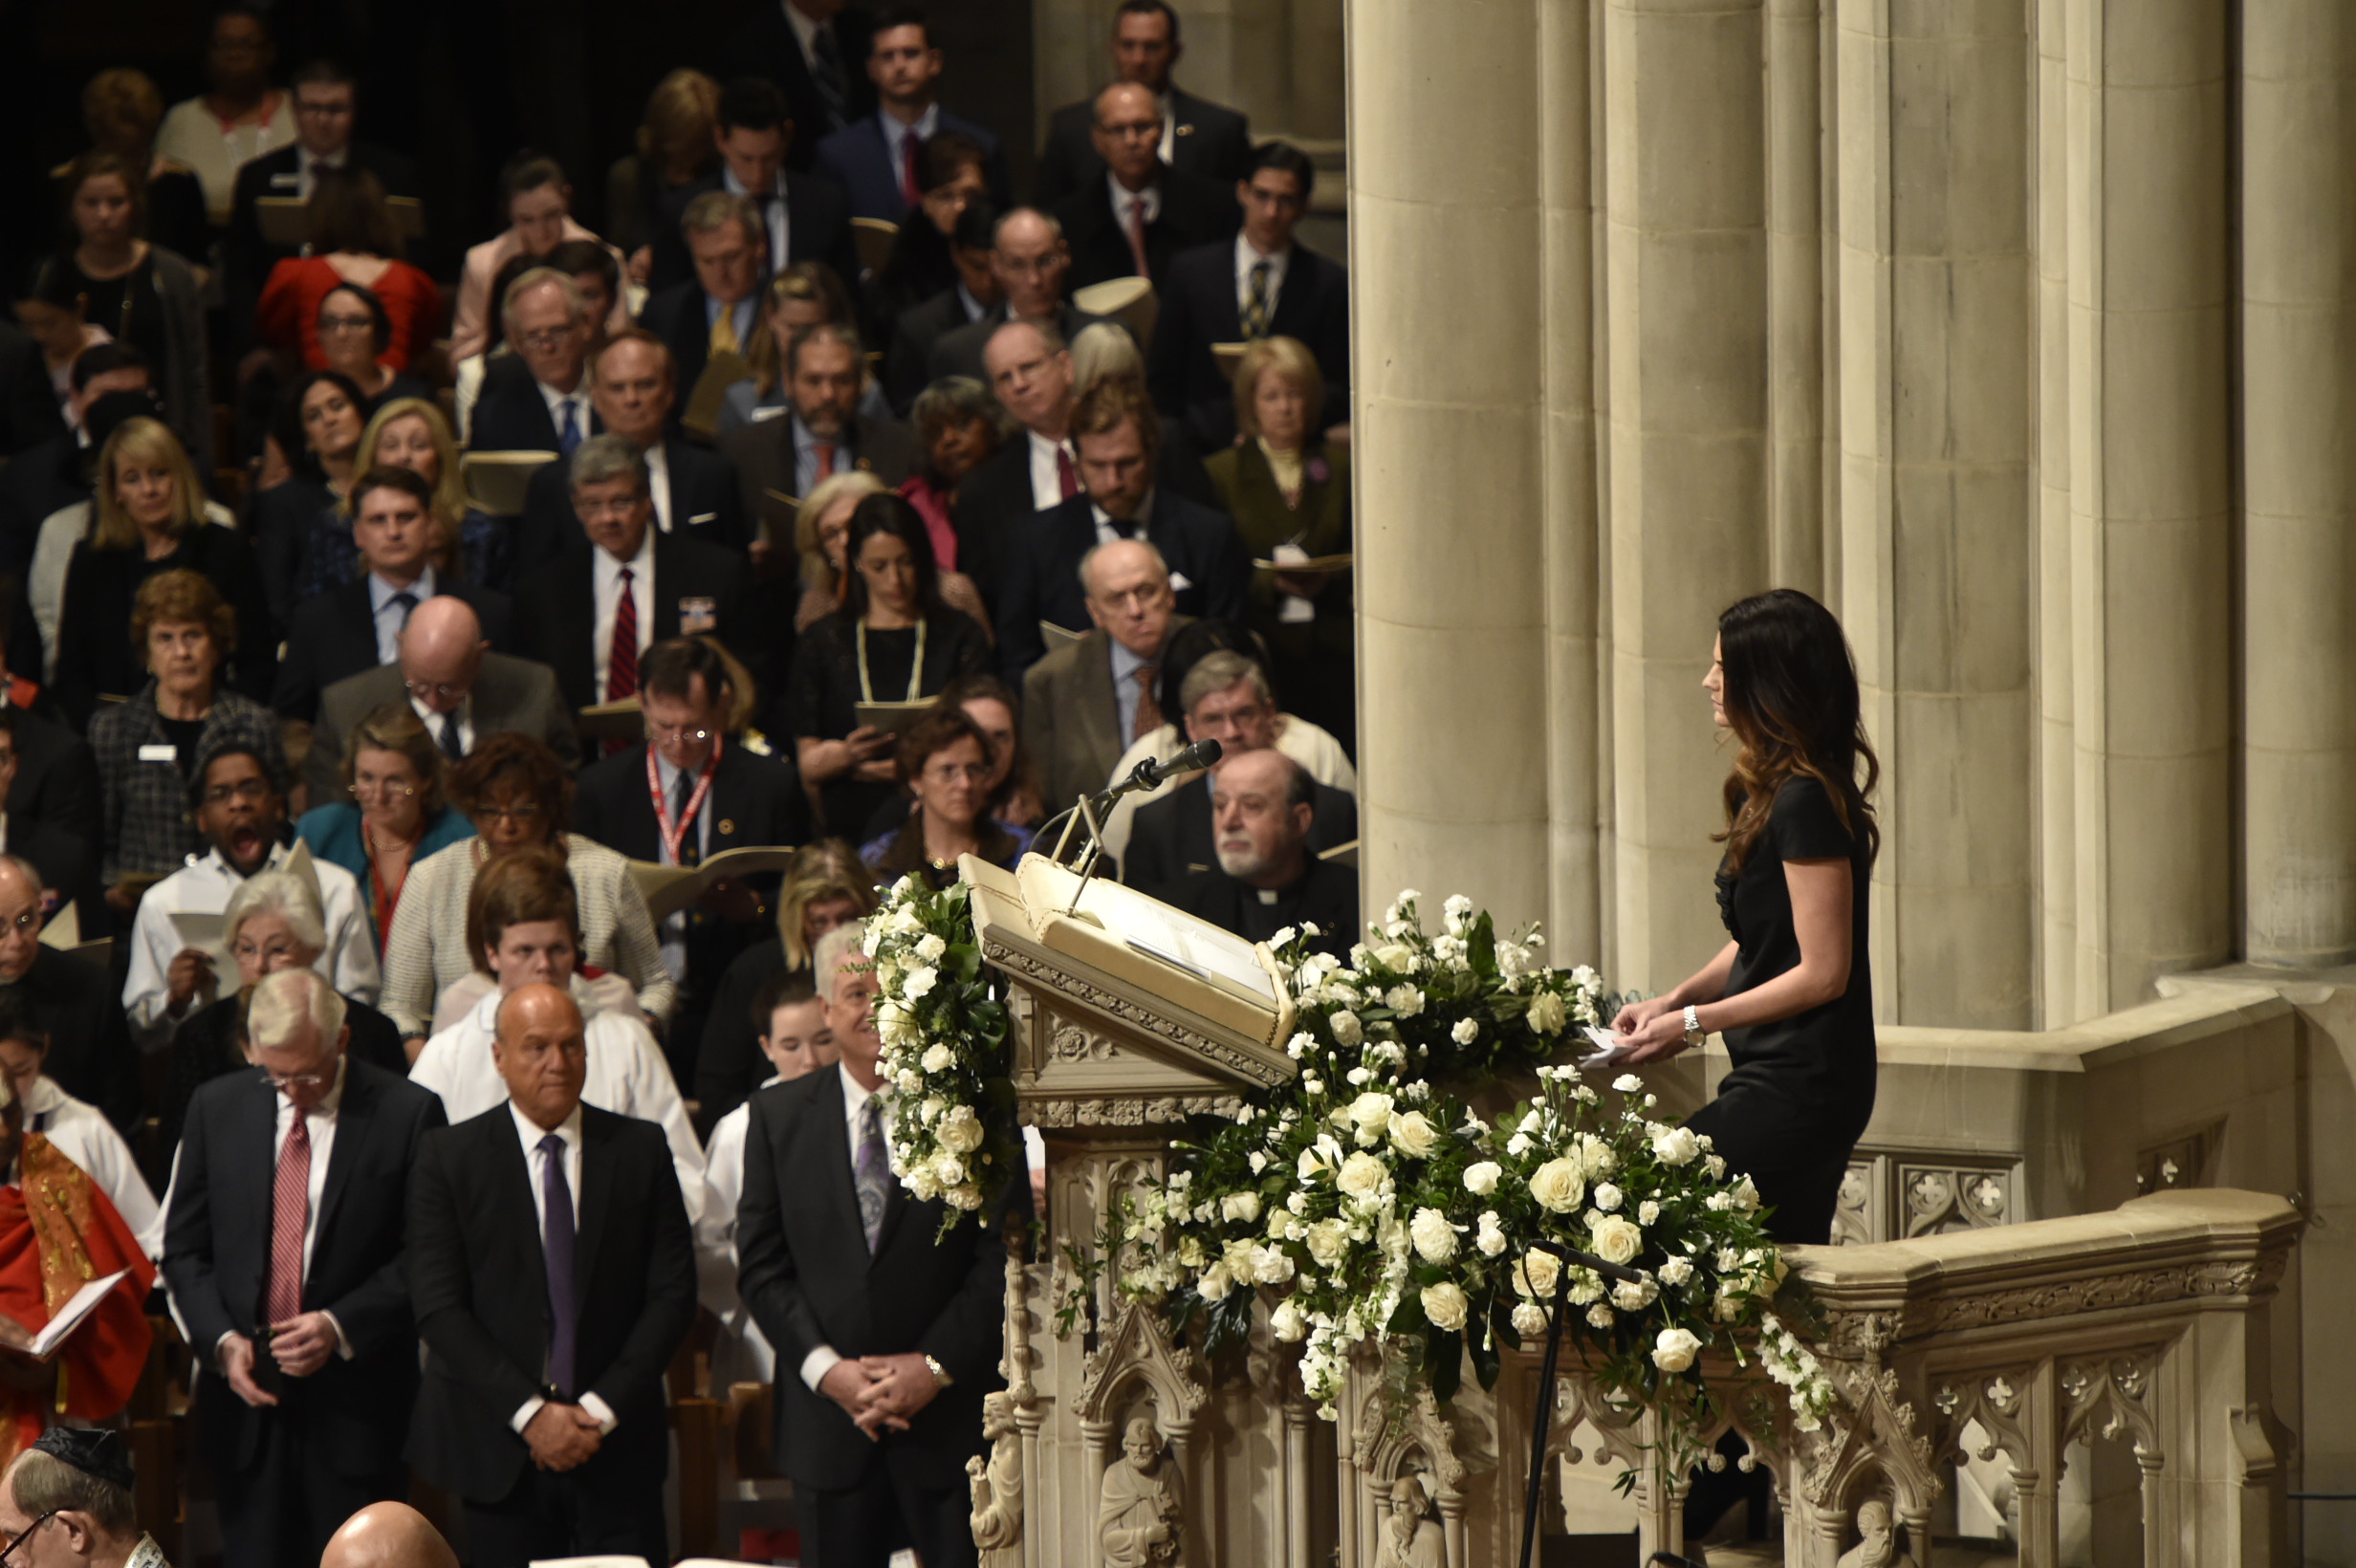 Cissie Graham Lynch standing behind podium at Washington National Cathedral